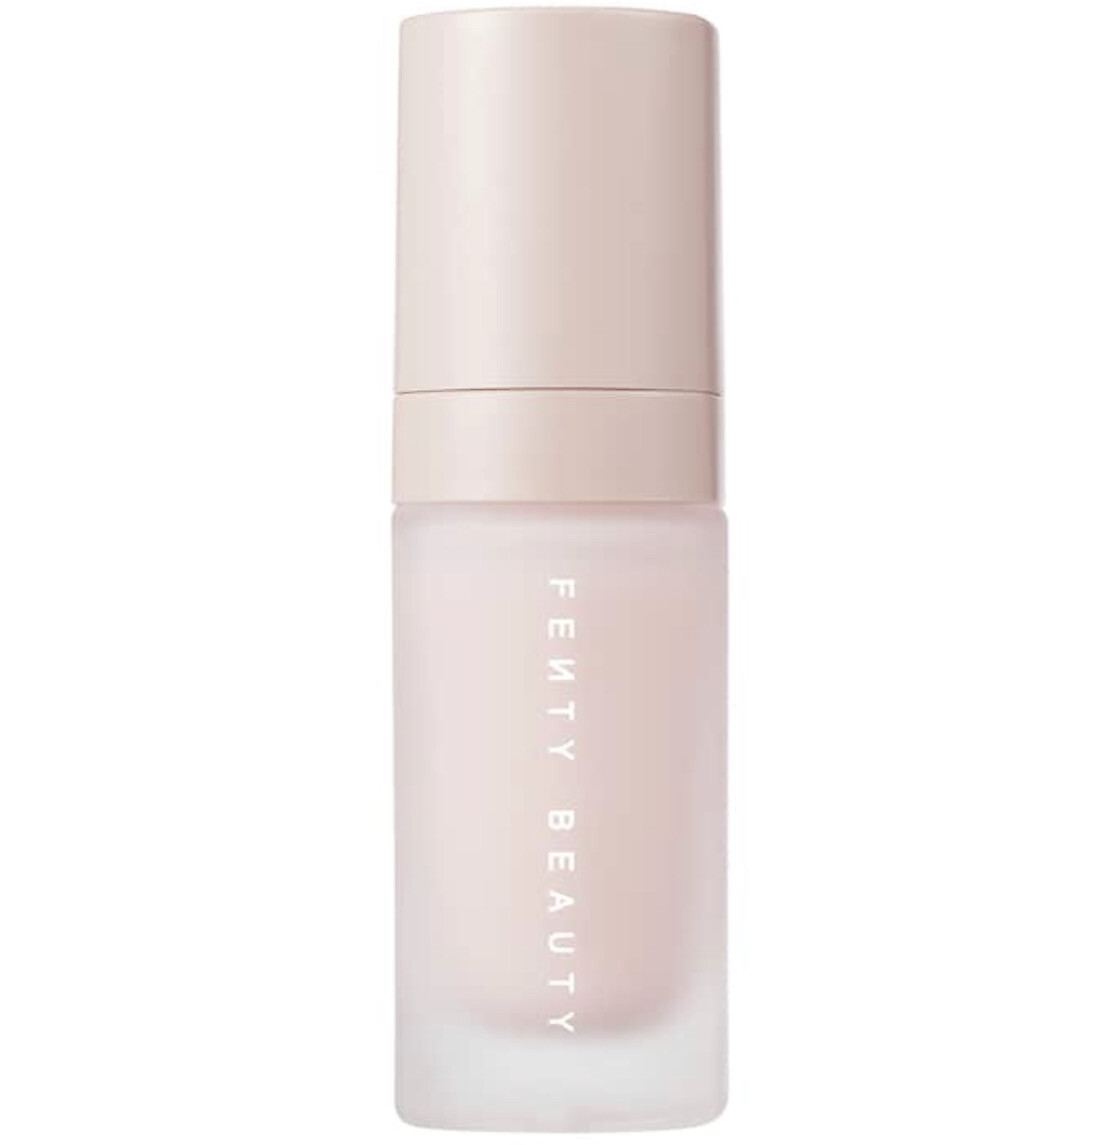 Fenty Beauty - Pro Filt'r Hydrating Primer | Soft Silk - 15 mL